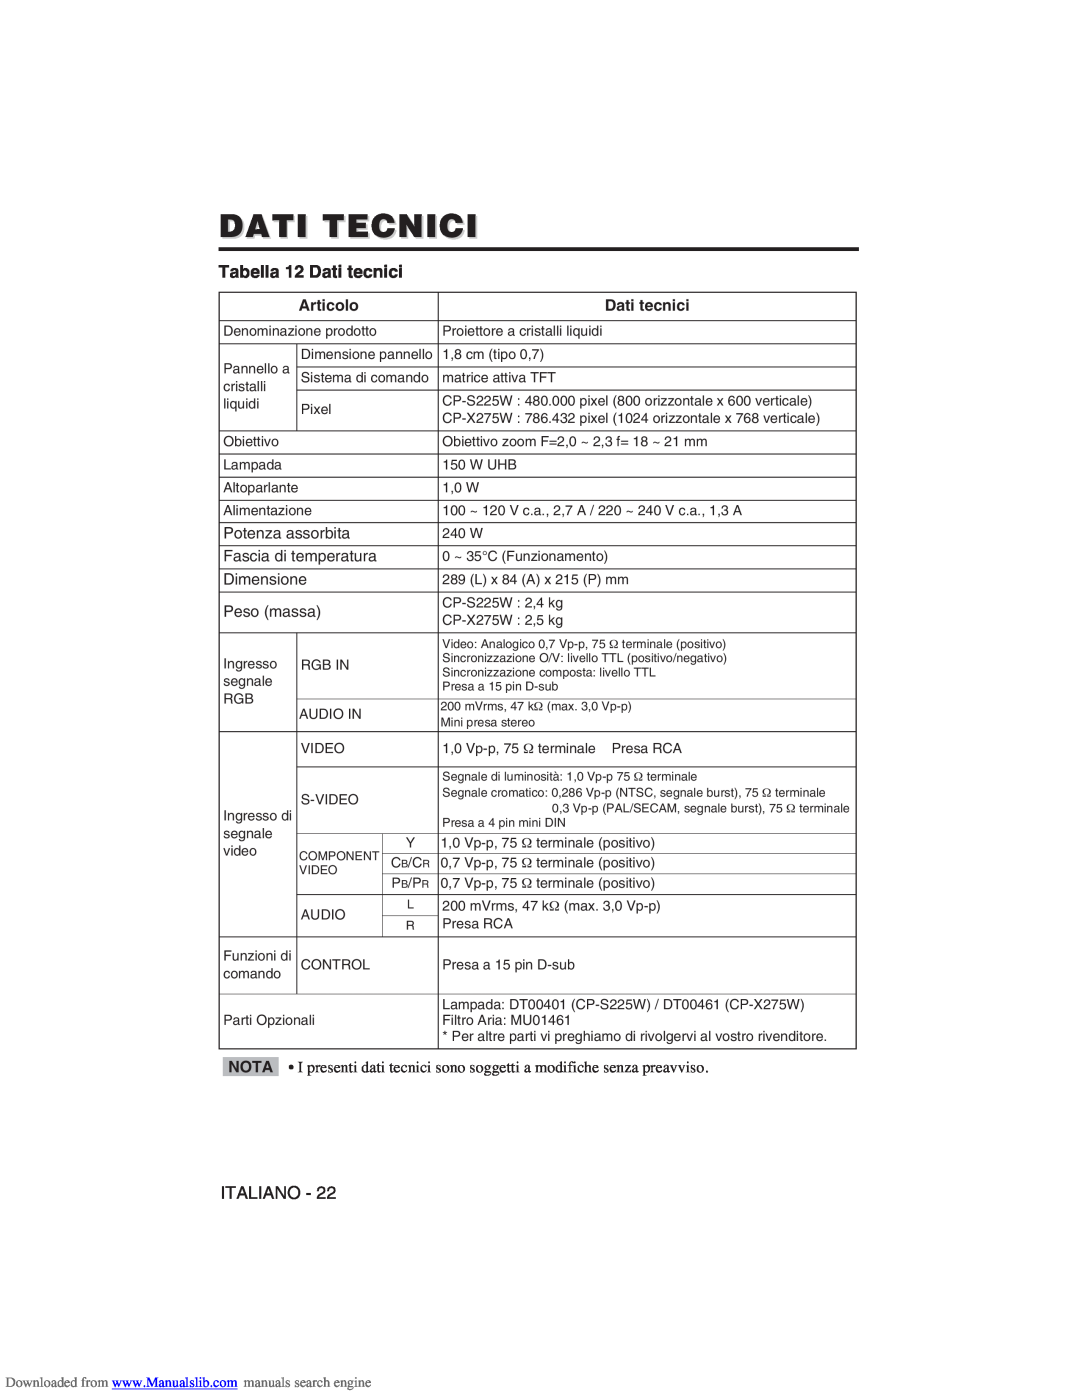 Hitachi CP-X275W user manual Dati Tecnici, Tabella 12 Dati tecnici 